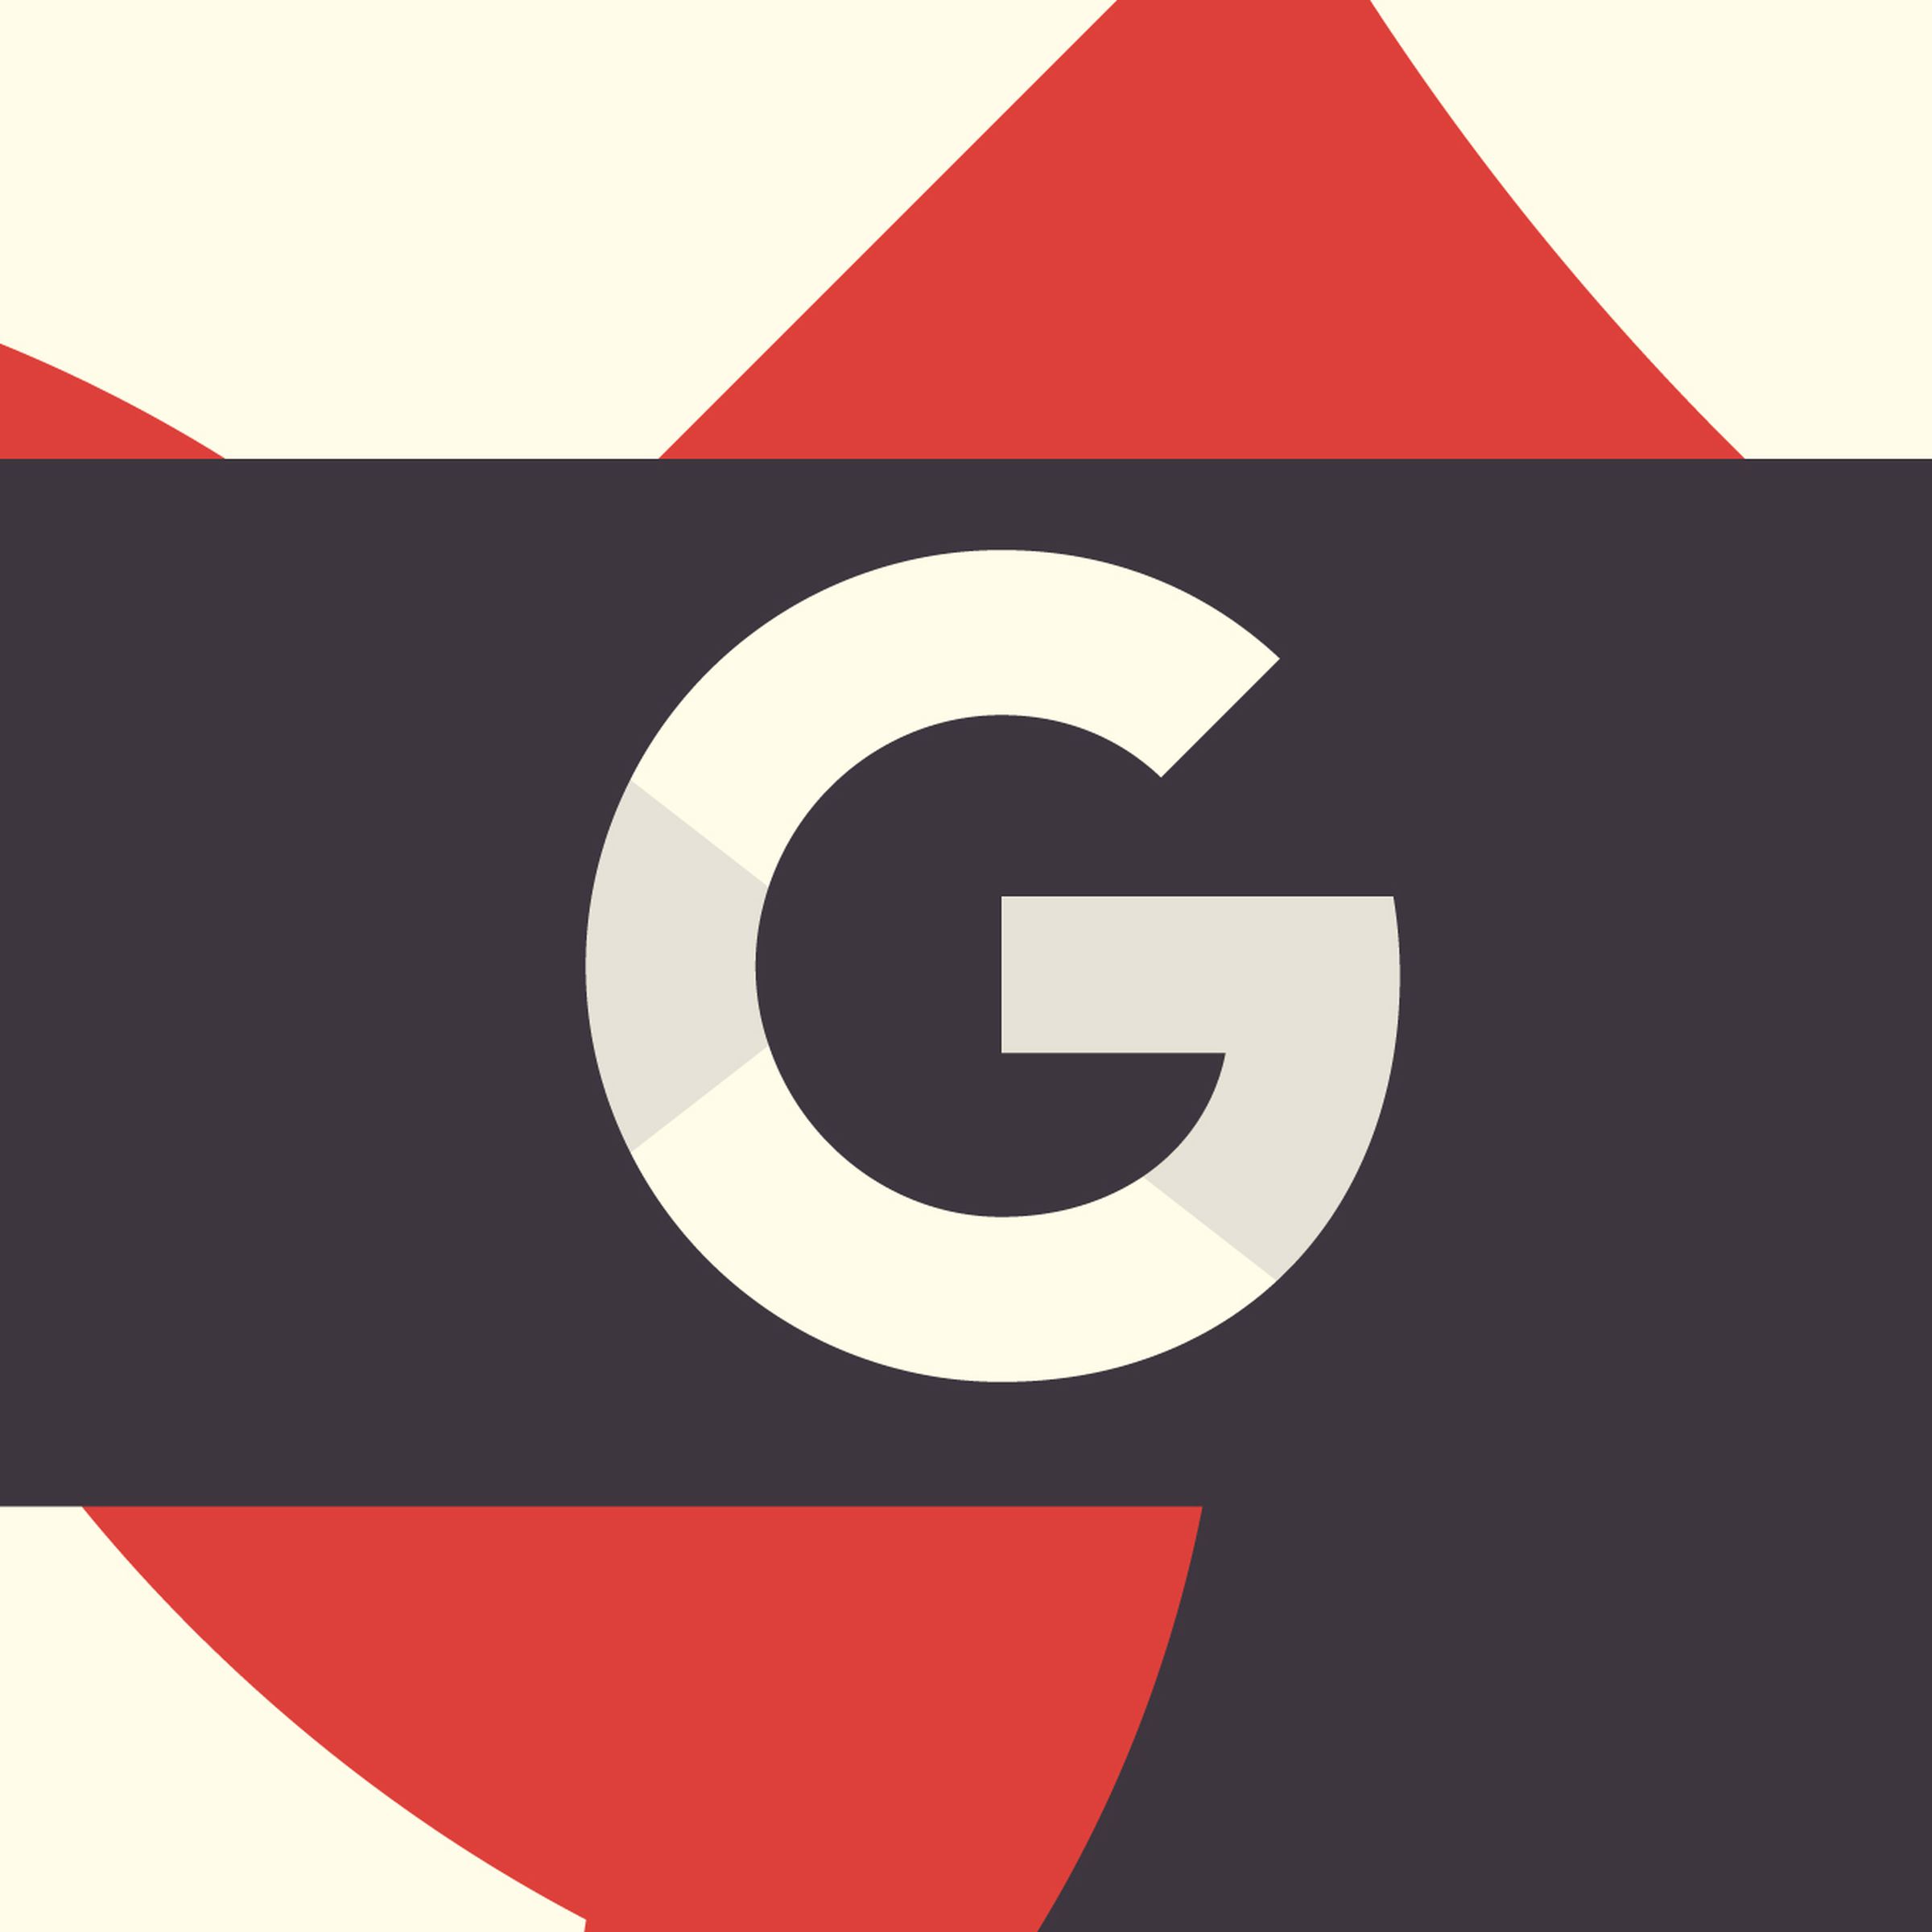 An illustration of the Google logo.